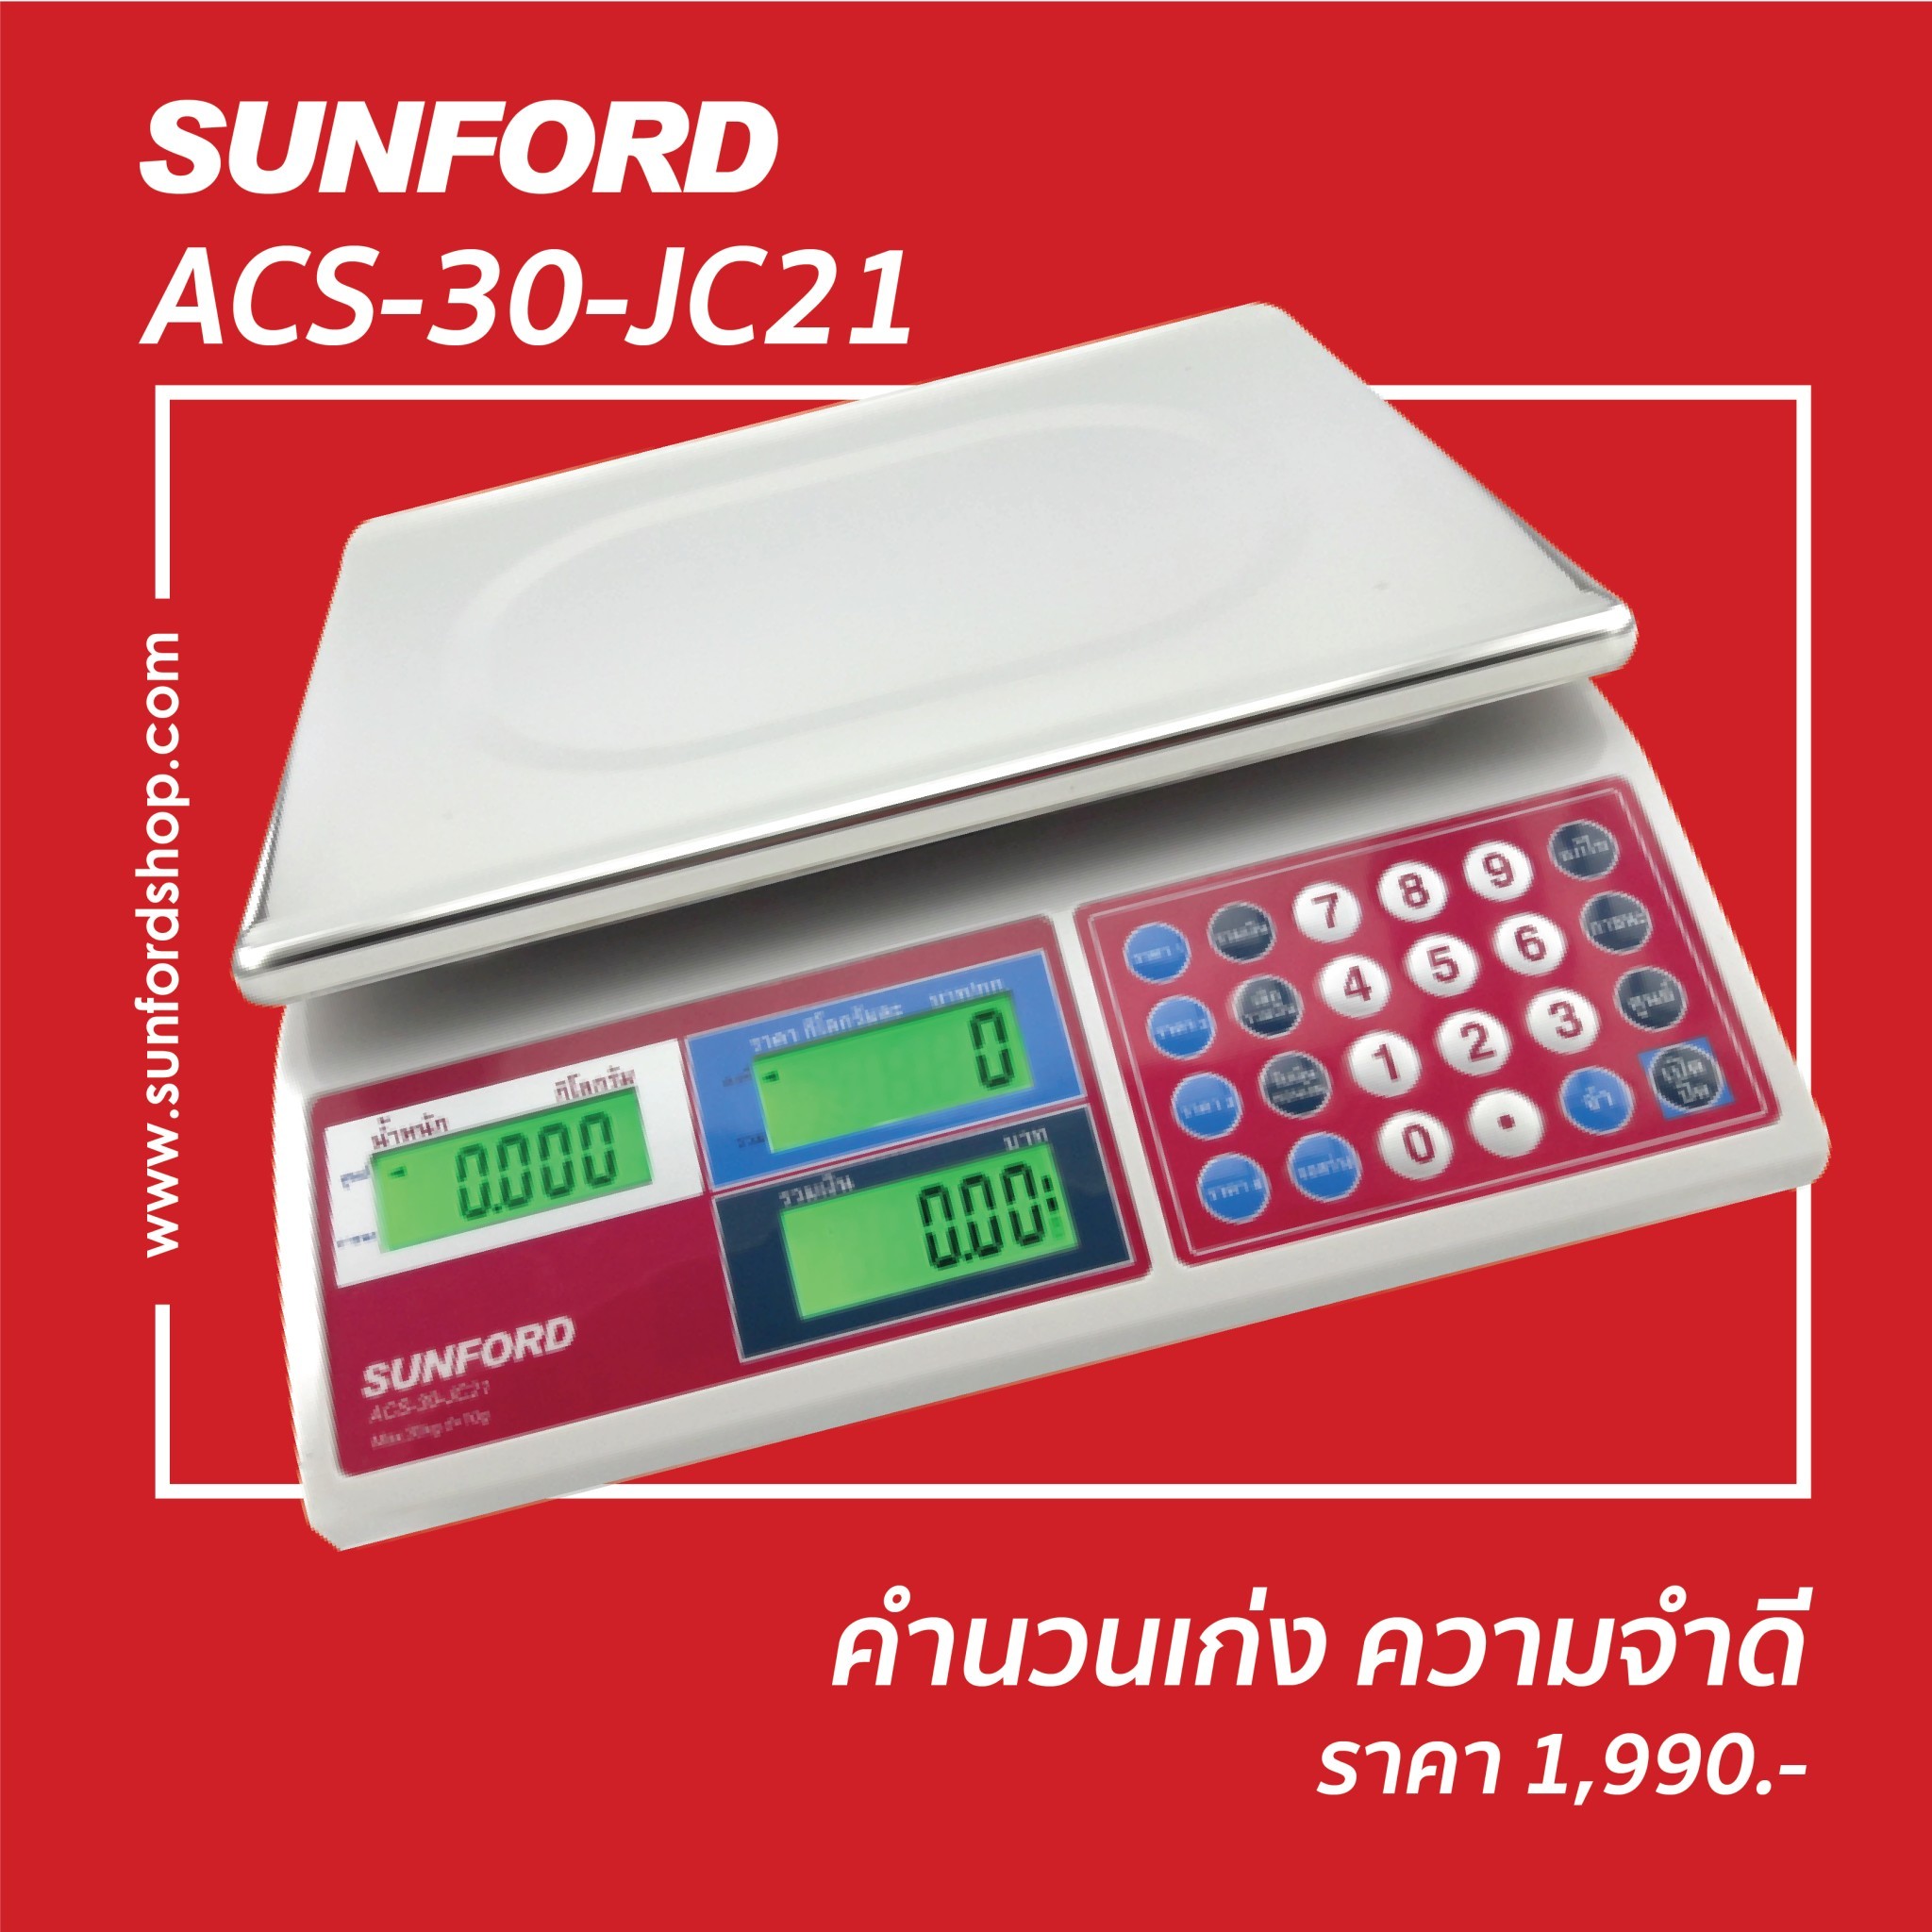 SUNFORD ACS-30-JC21